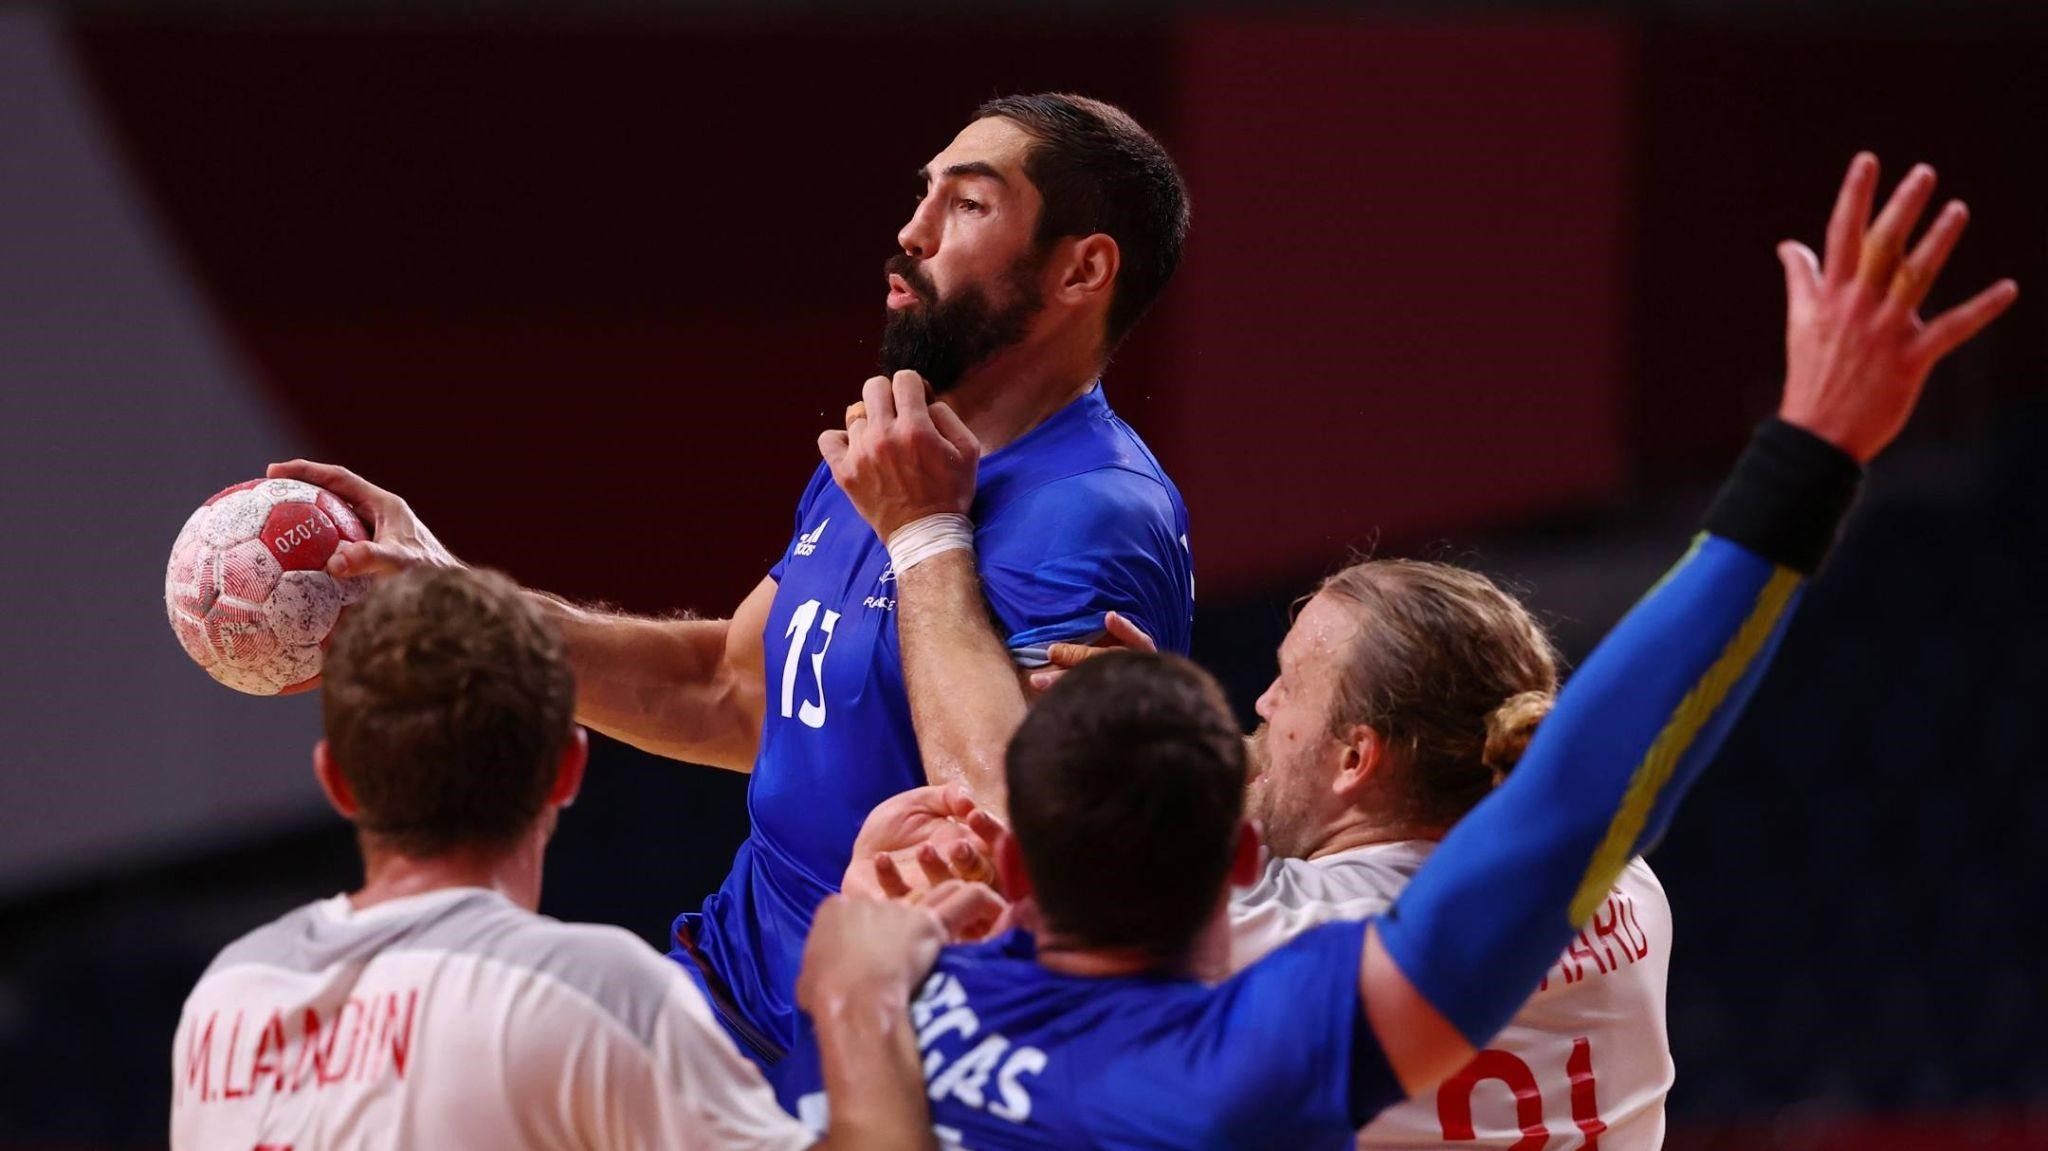 France nabs Olympic gold in men's handball